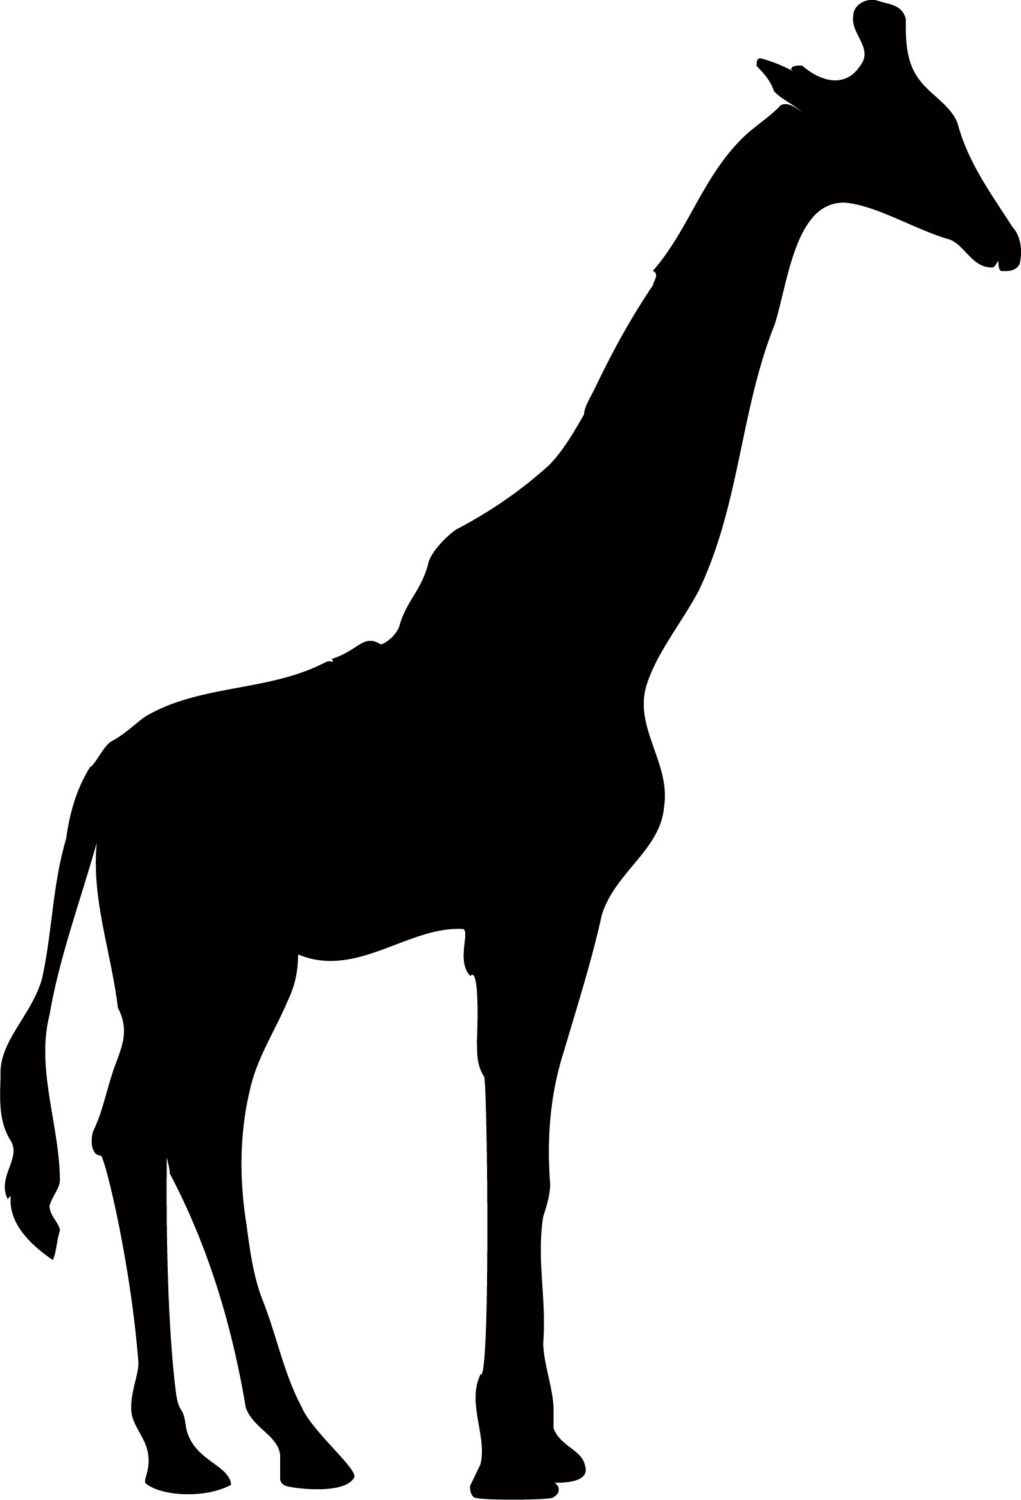 Best giraffe silhouette.